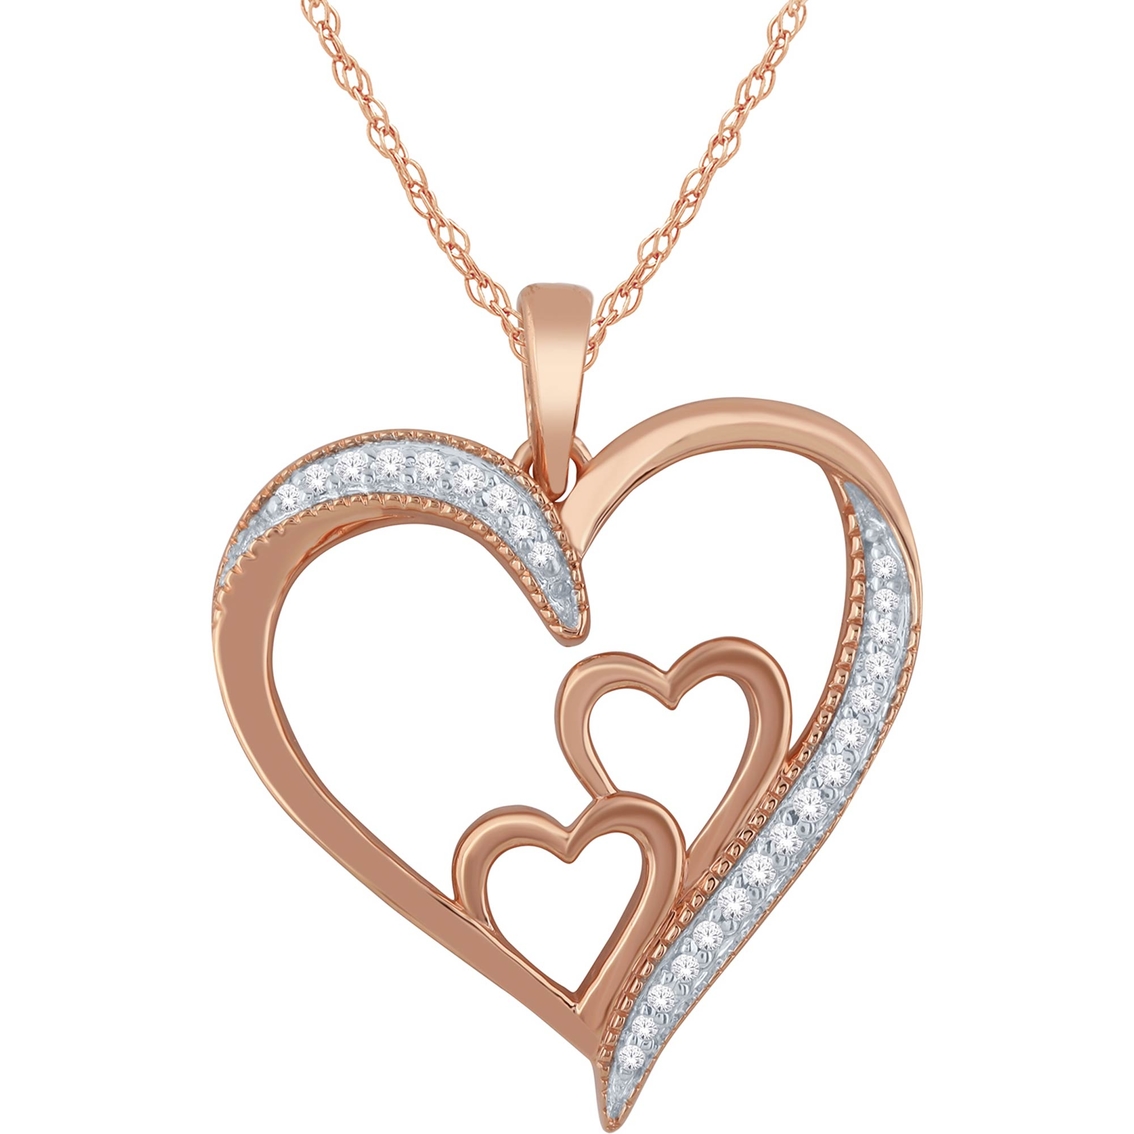 Cherish Heart Locket Pendant Necklace